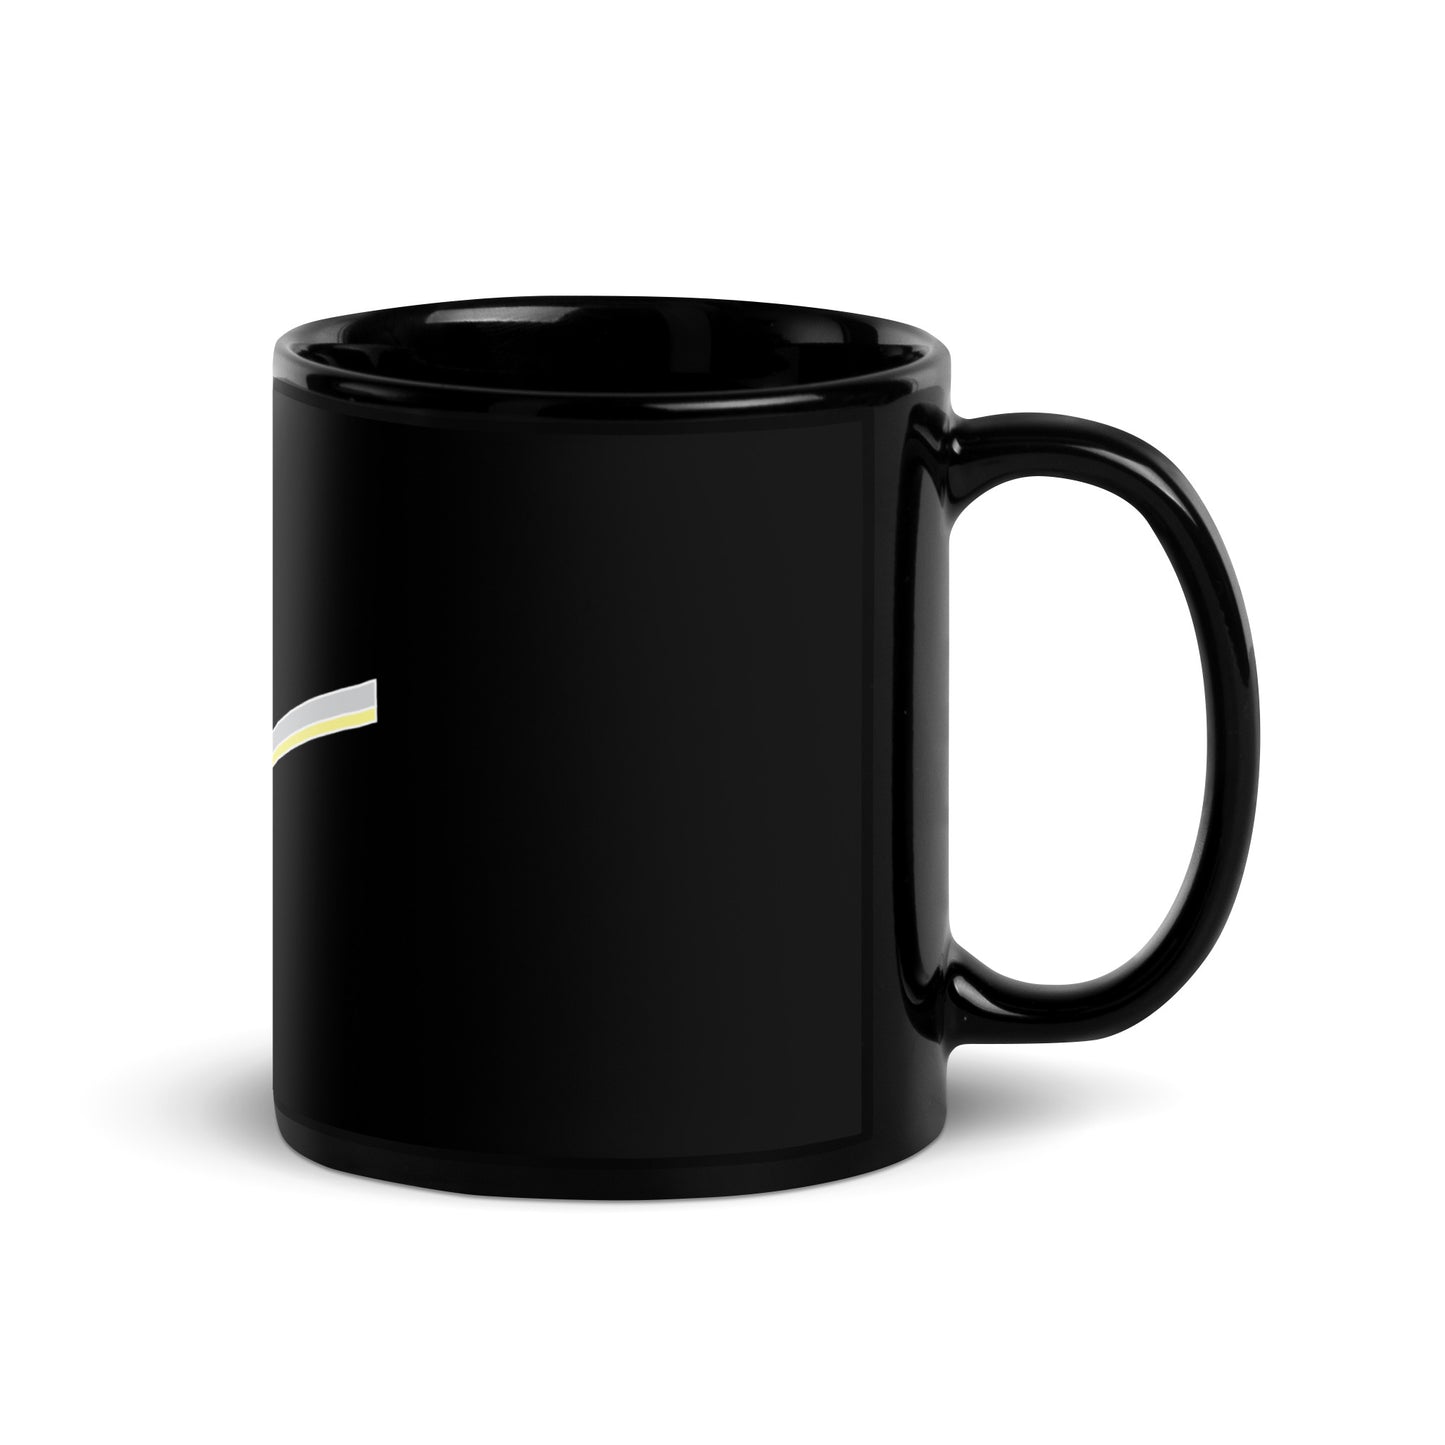 Mug - Ando - Black Glossy